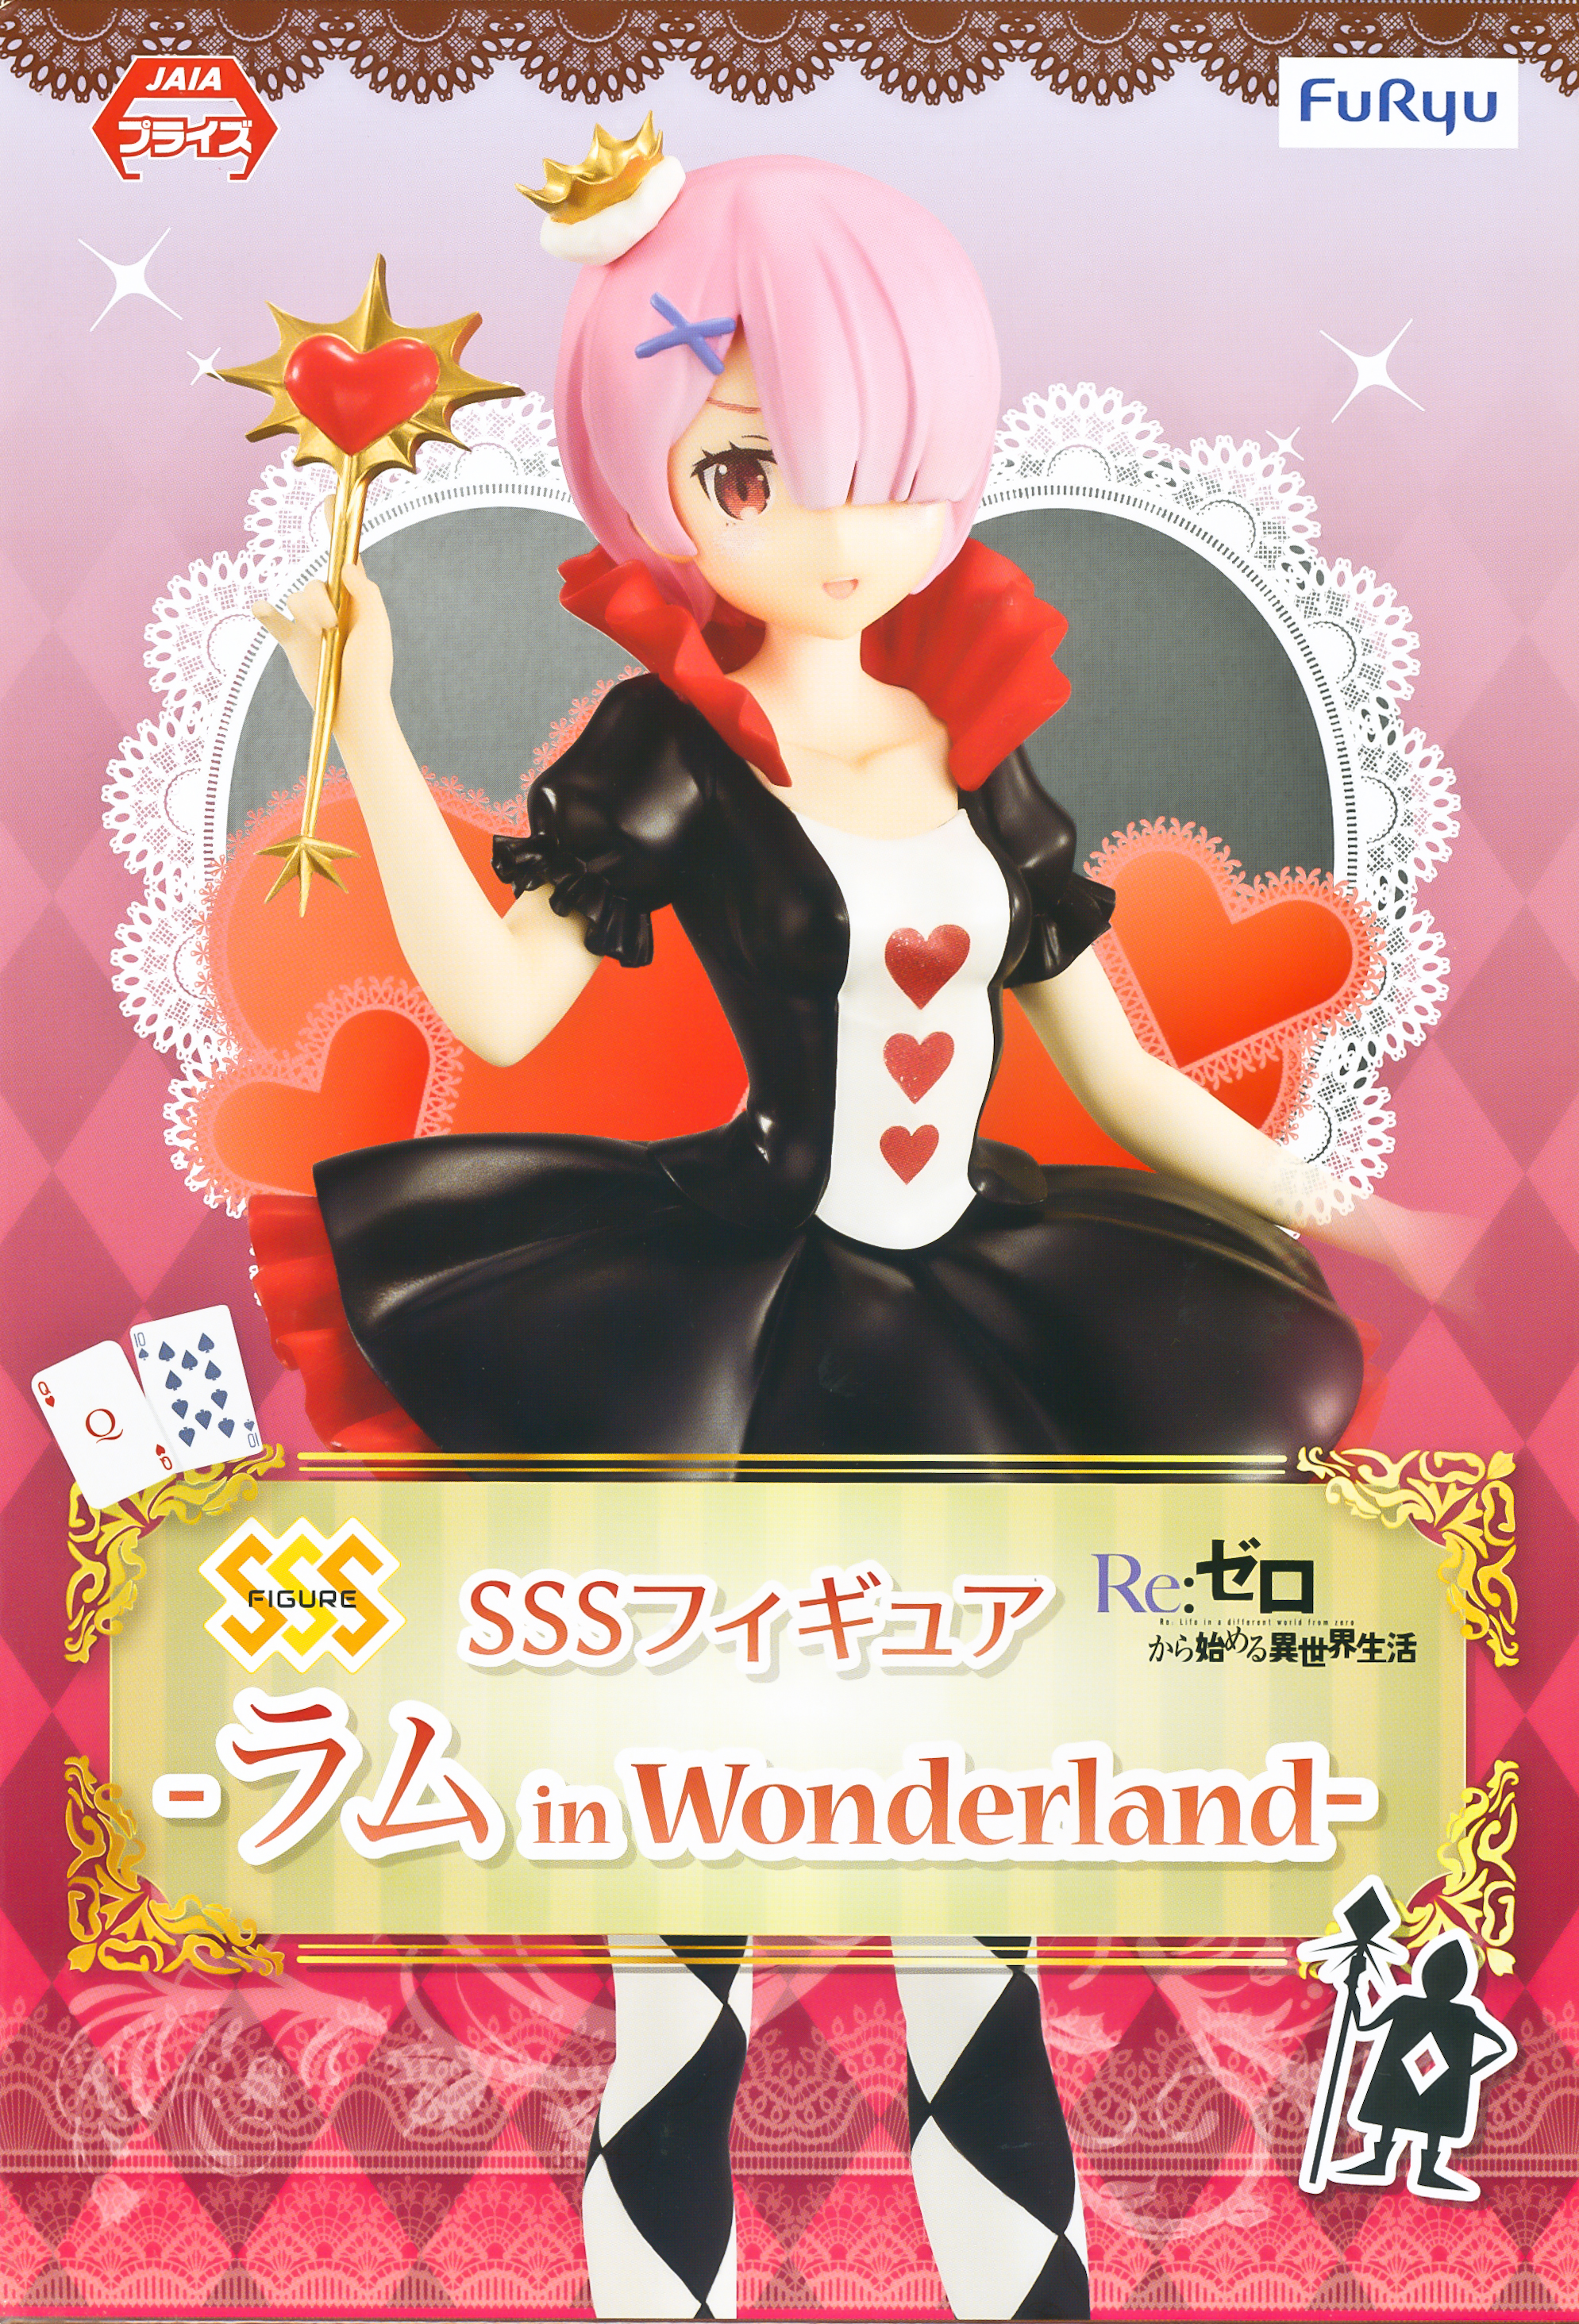 Ram, Alice In Wonderland Figure, Re:Zero - Starting Life in Another World, SSS Figure, Furyu